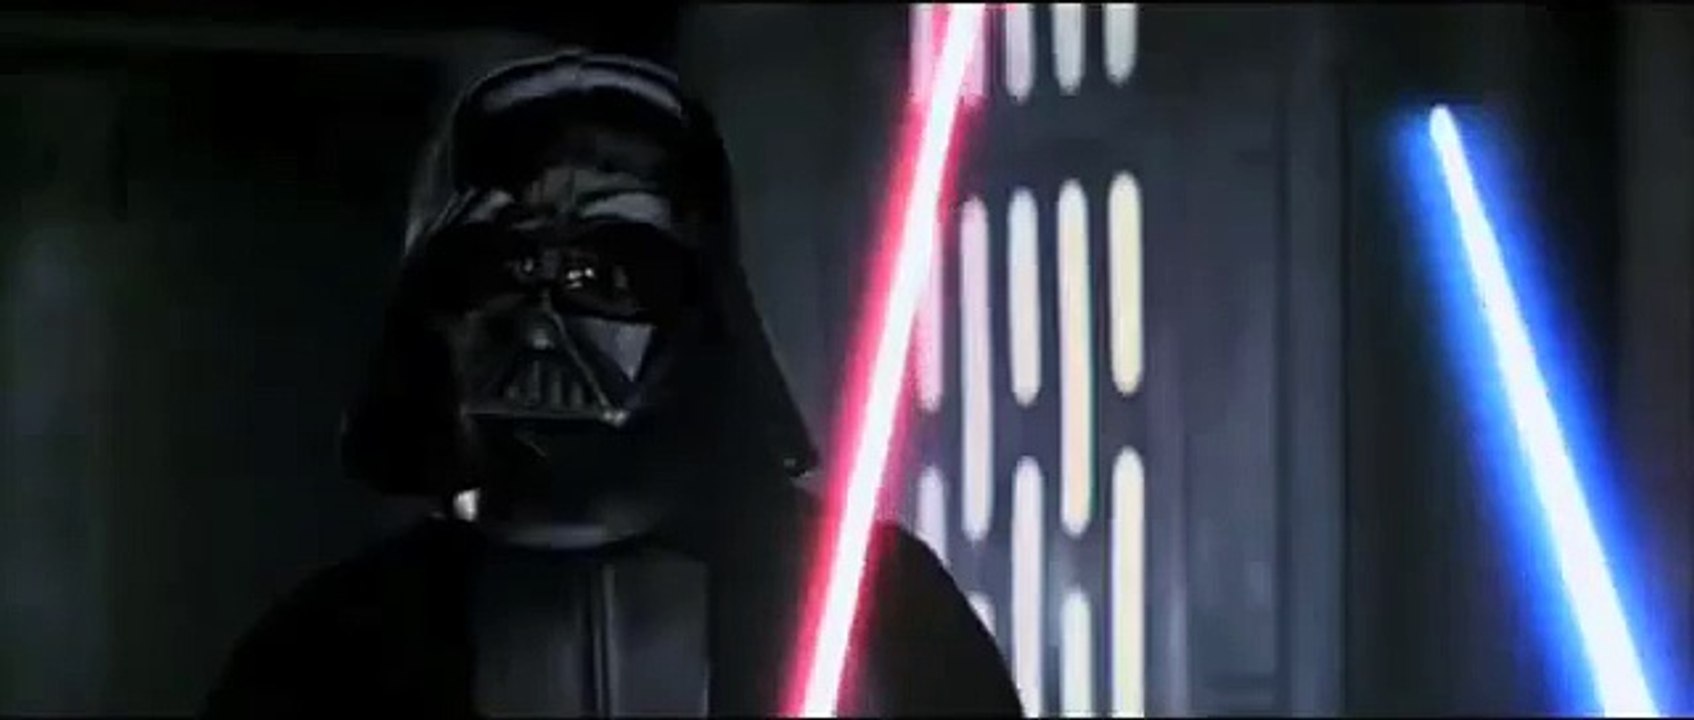 Obi-Wan Kenobi vs. Darth Vader - German Version